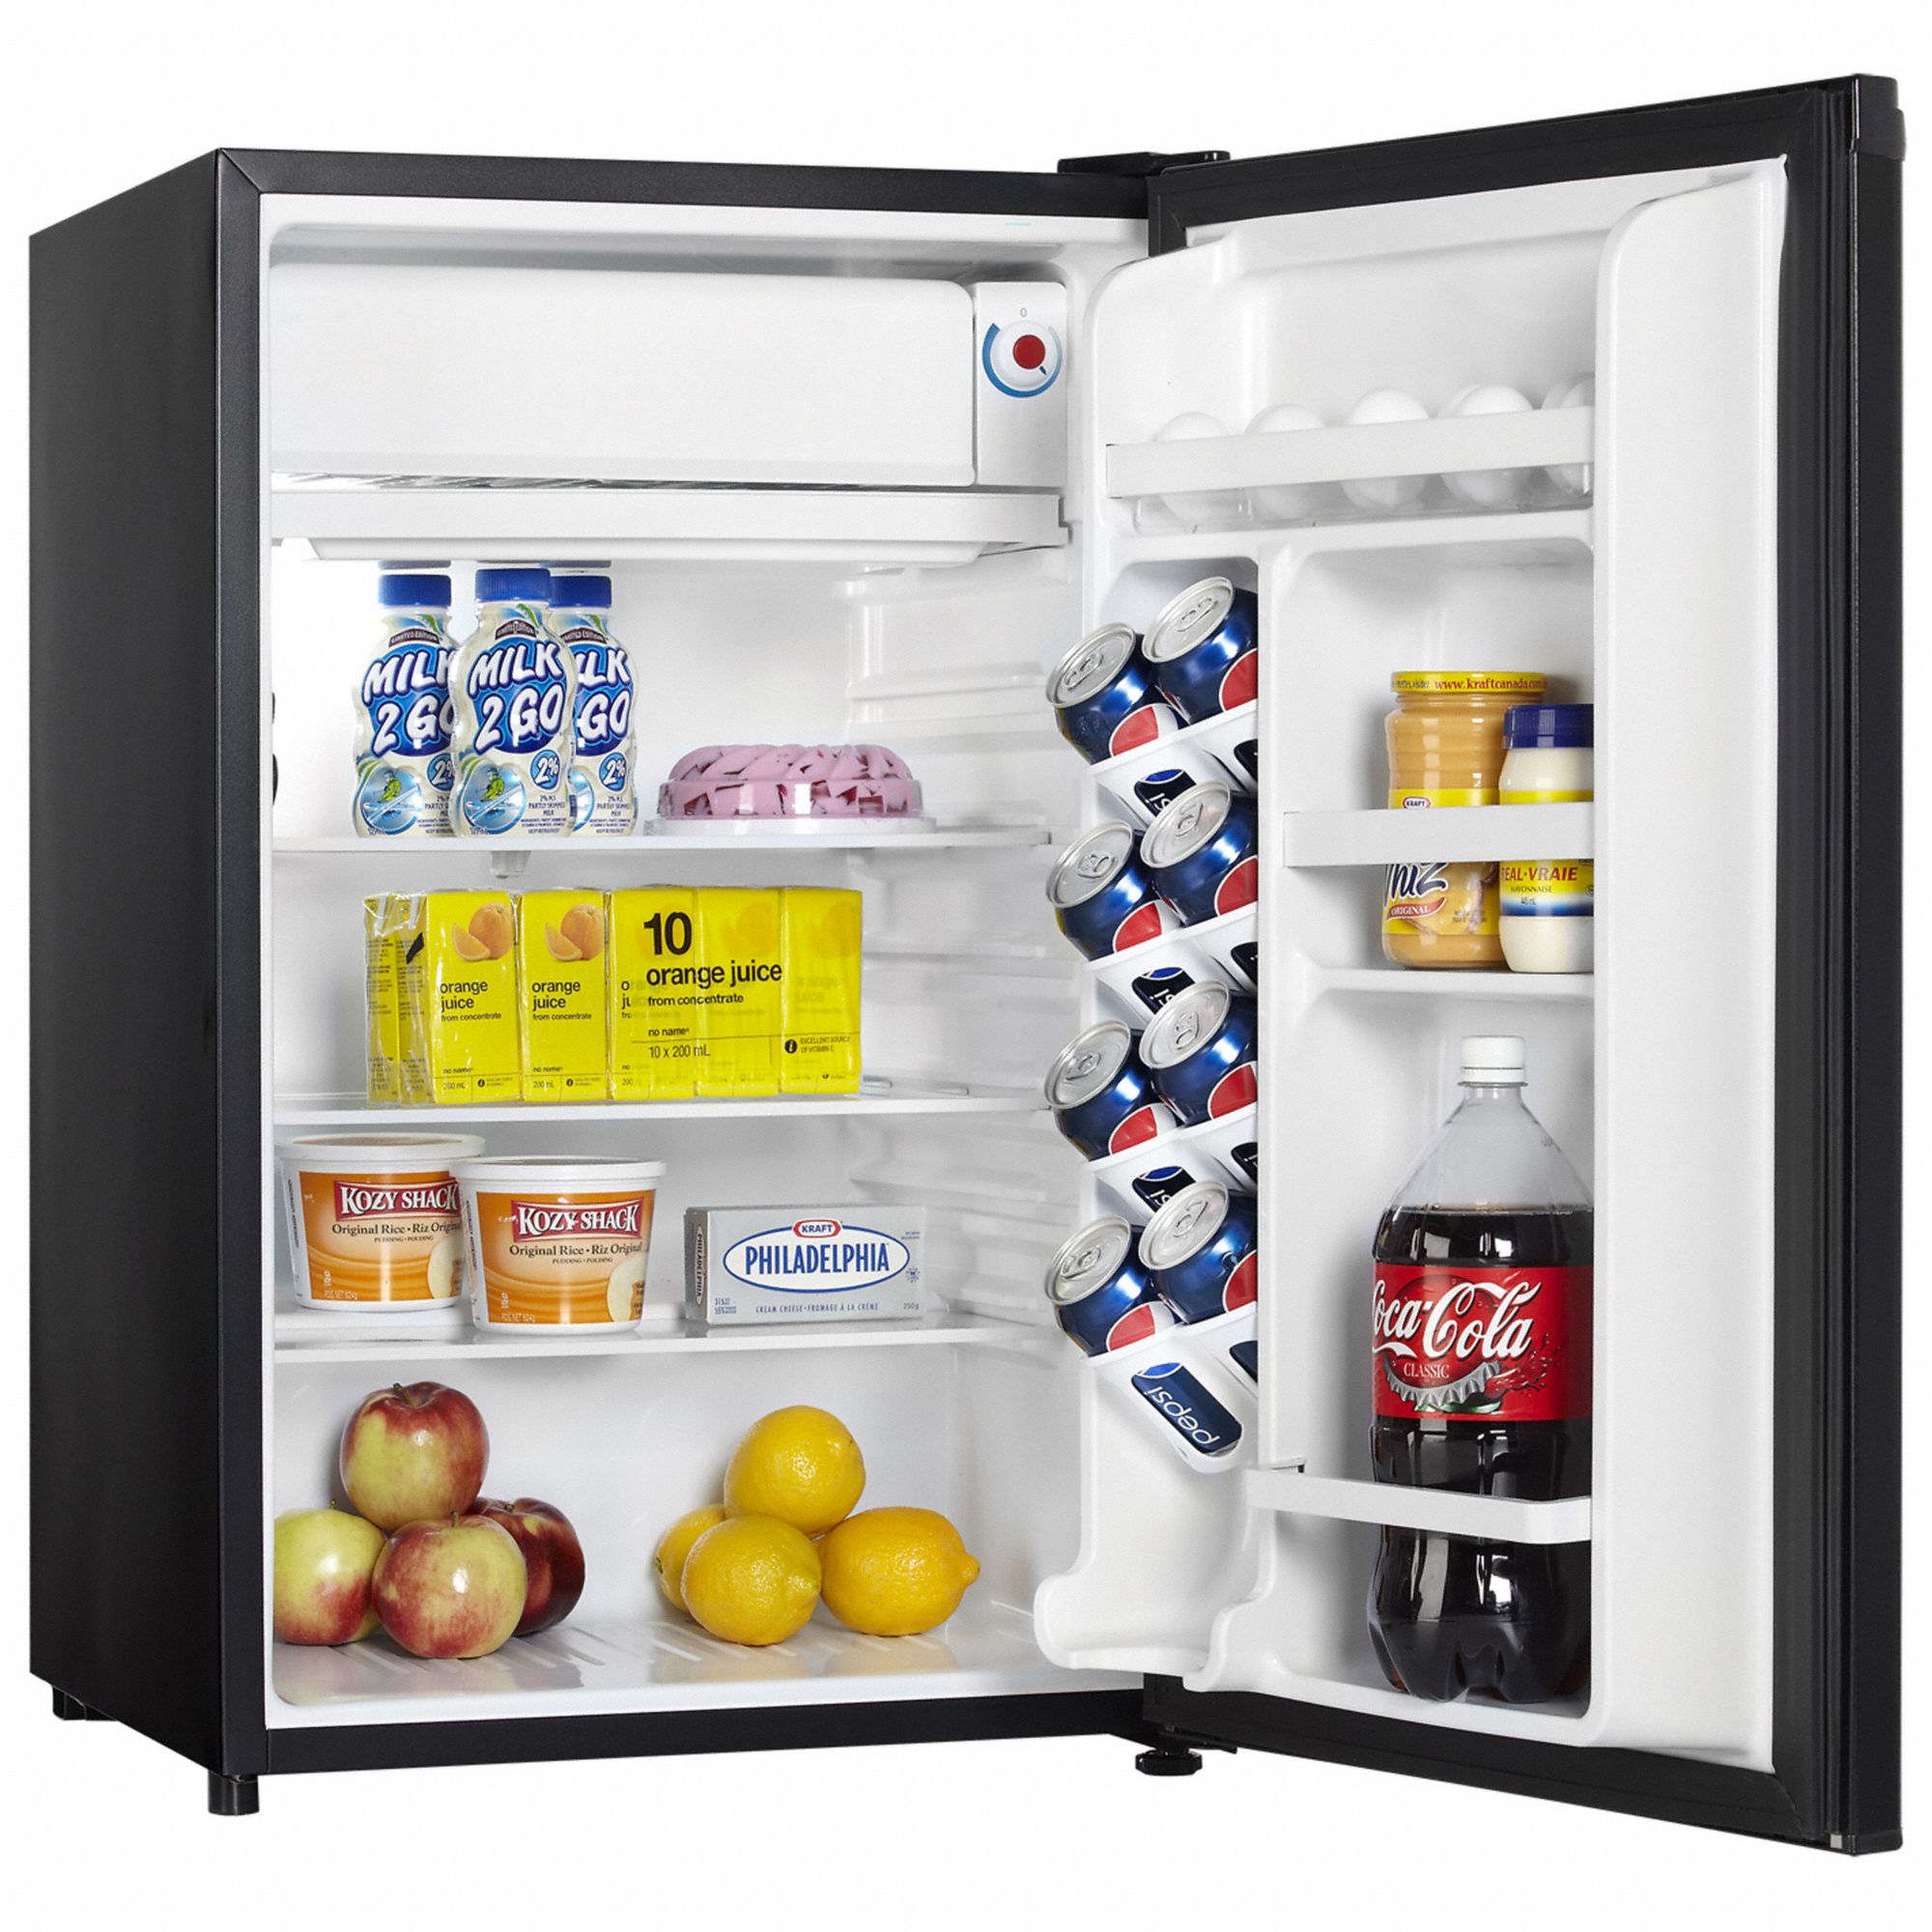 Danby Designer DCR044A2WDD Compact Refrigerator with Freezer - 4.4 cu ft - White